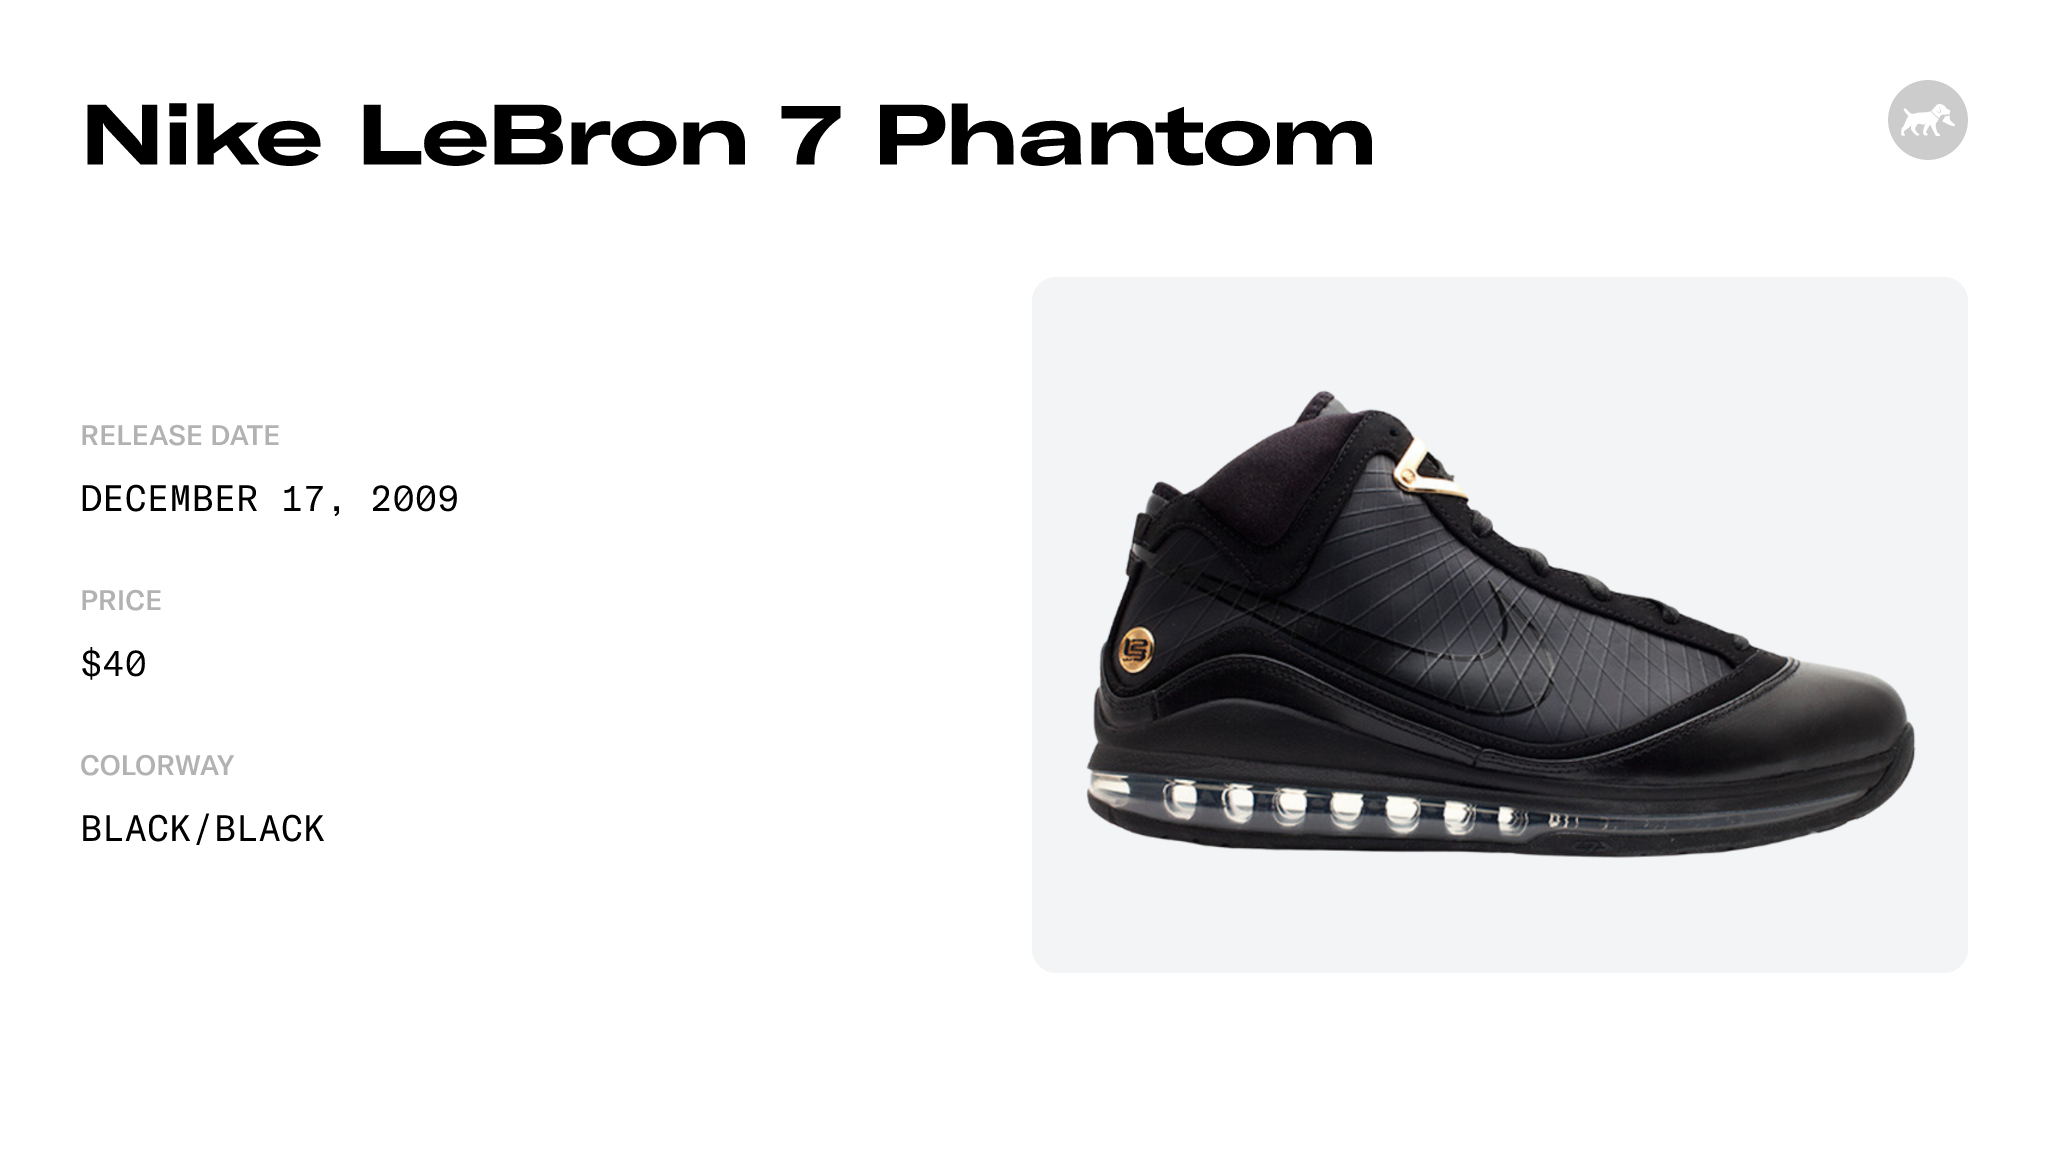 Nike LeBron 7 Phantom - 375664-001 Raffles and Release Date